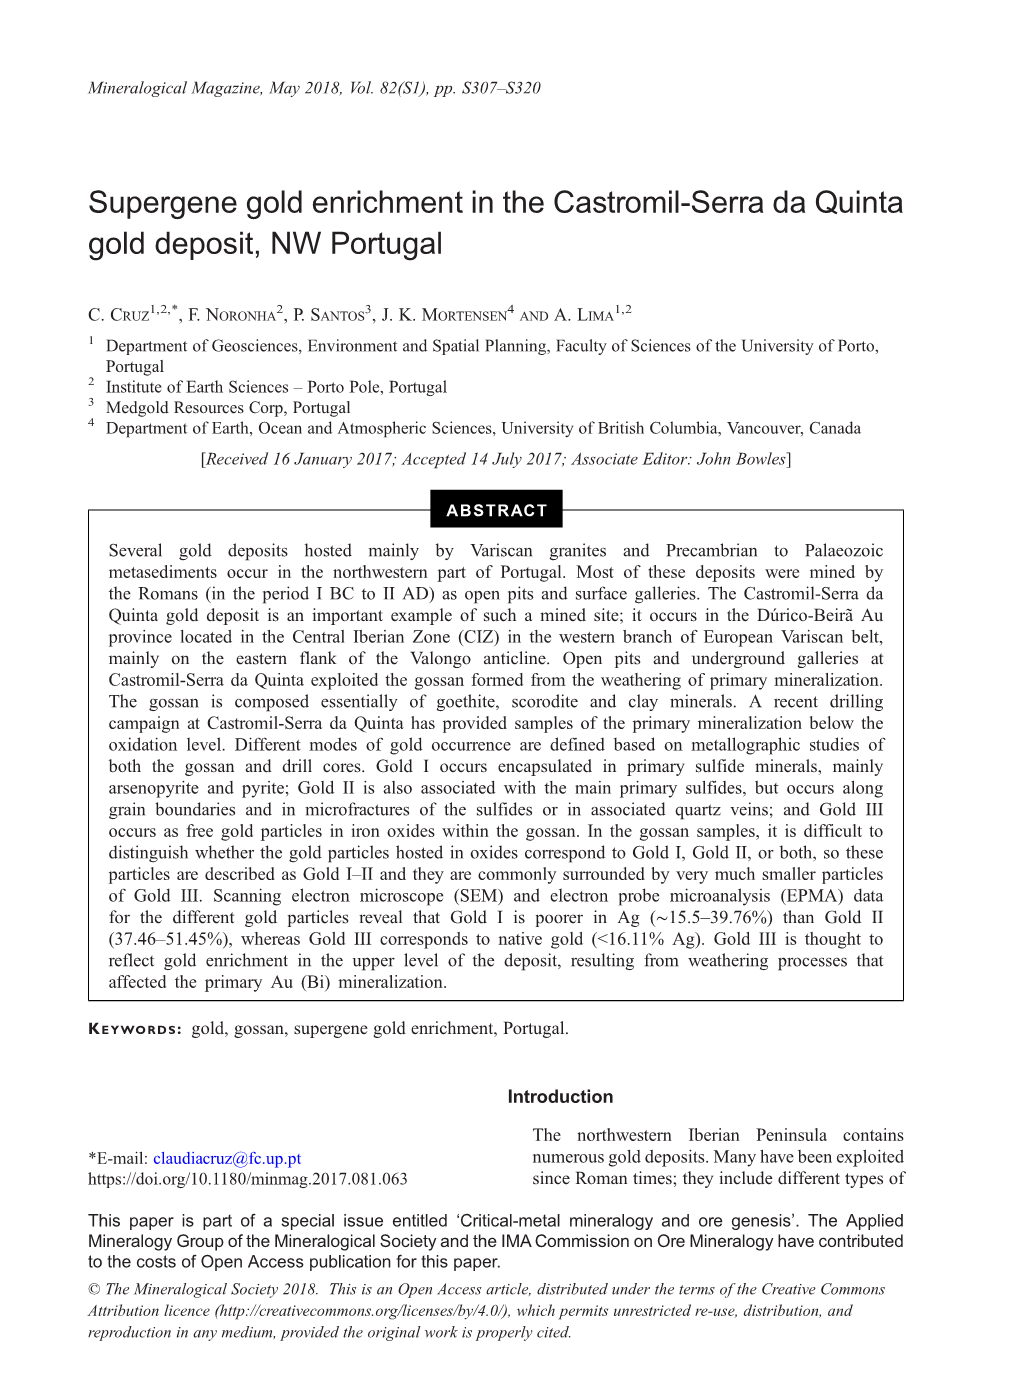 Supergene Gold Enrichment in the Castromil-Serra Da Quinta Gold Deposit, NW Portugal